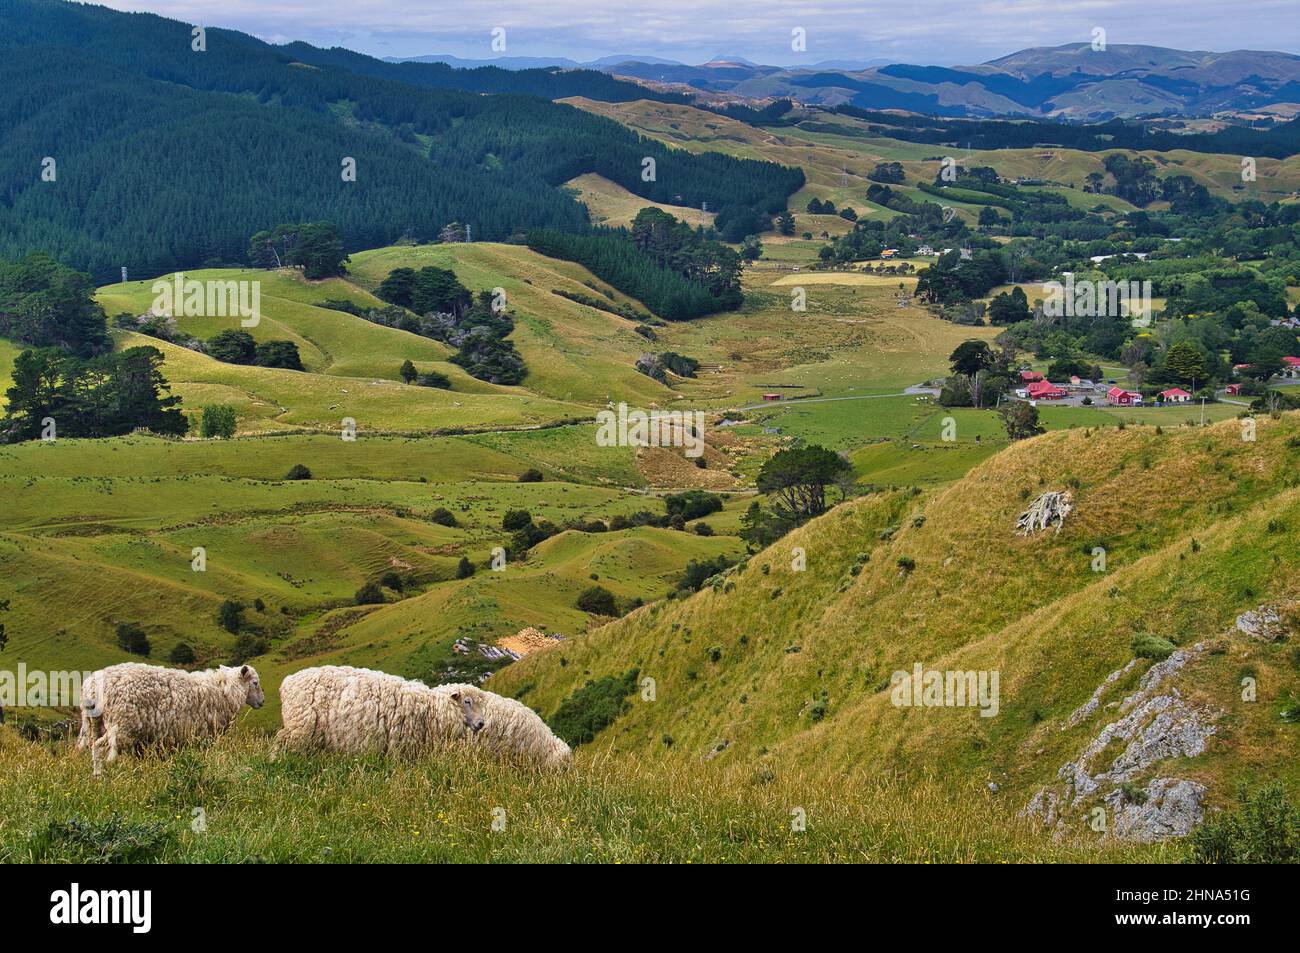 The green hills with meadows and trees of the sheep farm Battle Hill Farm, Pauatahanui, Porirua, Greater Wellington, North Island, New Zealand Stock Photo